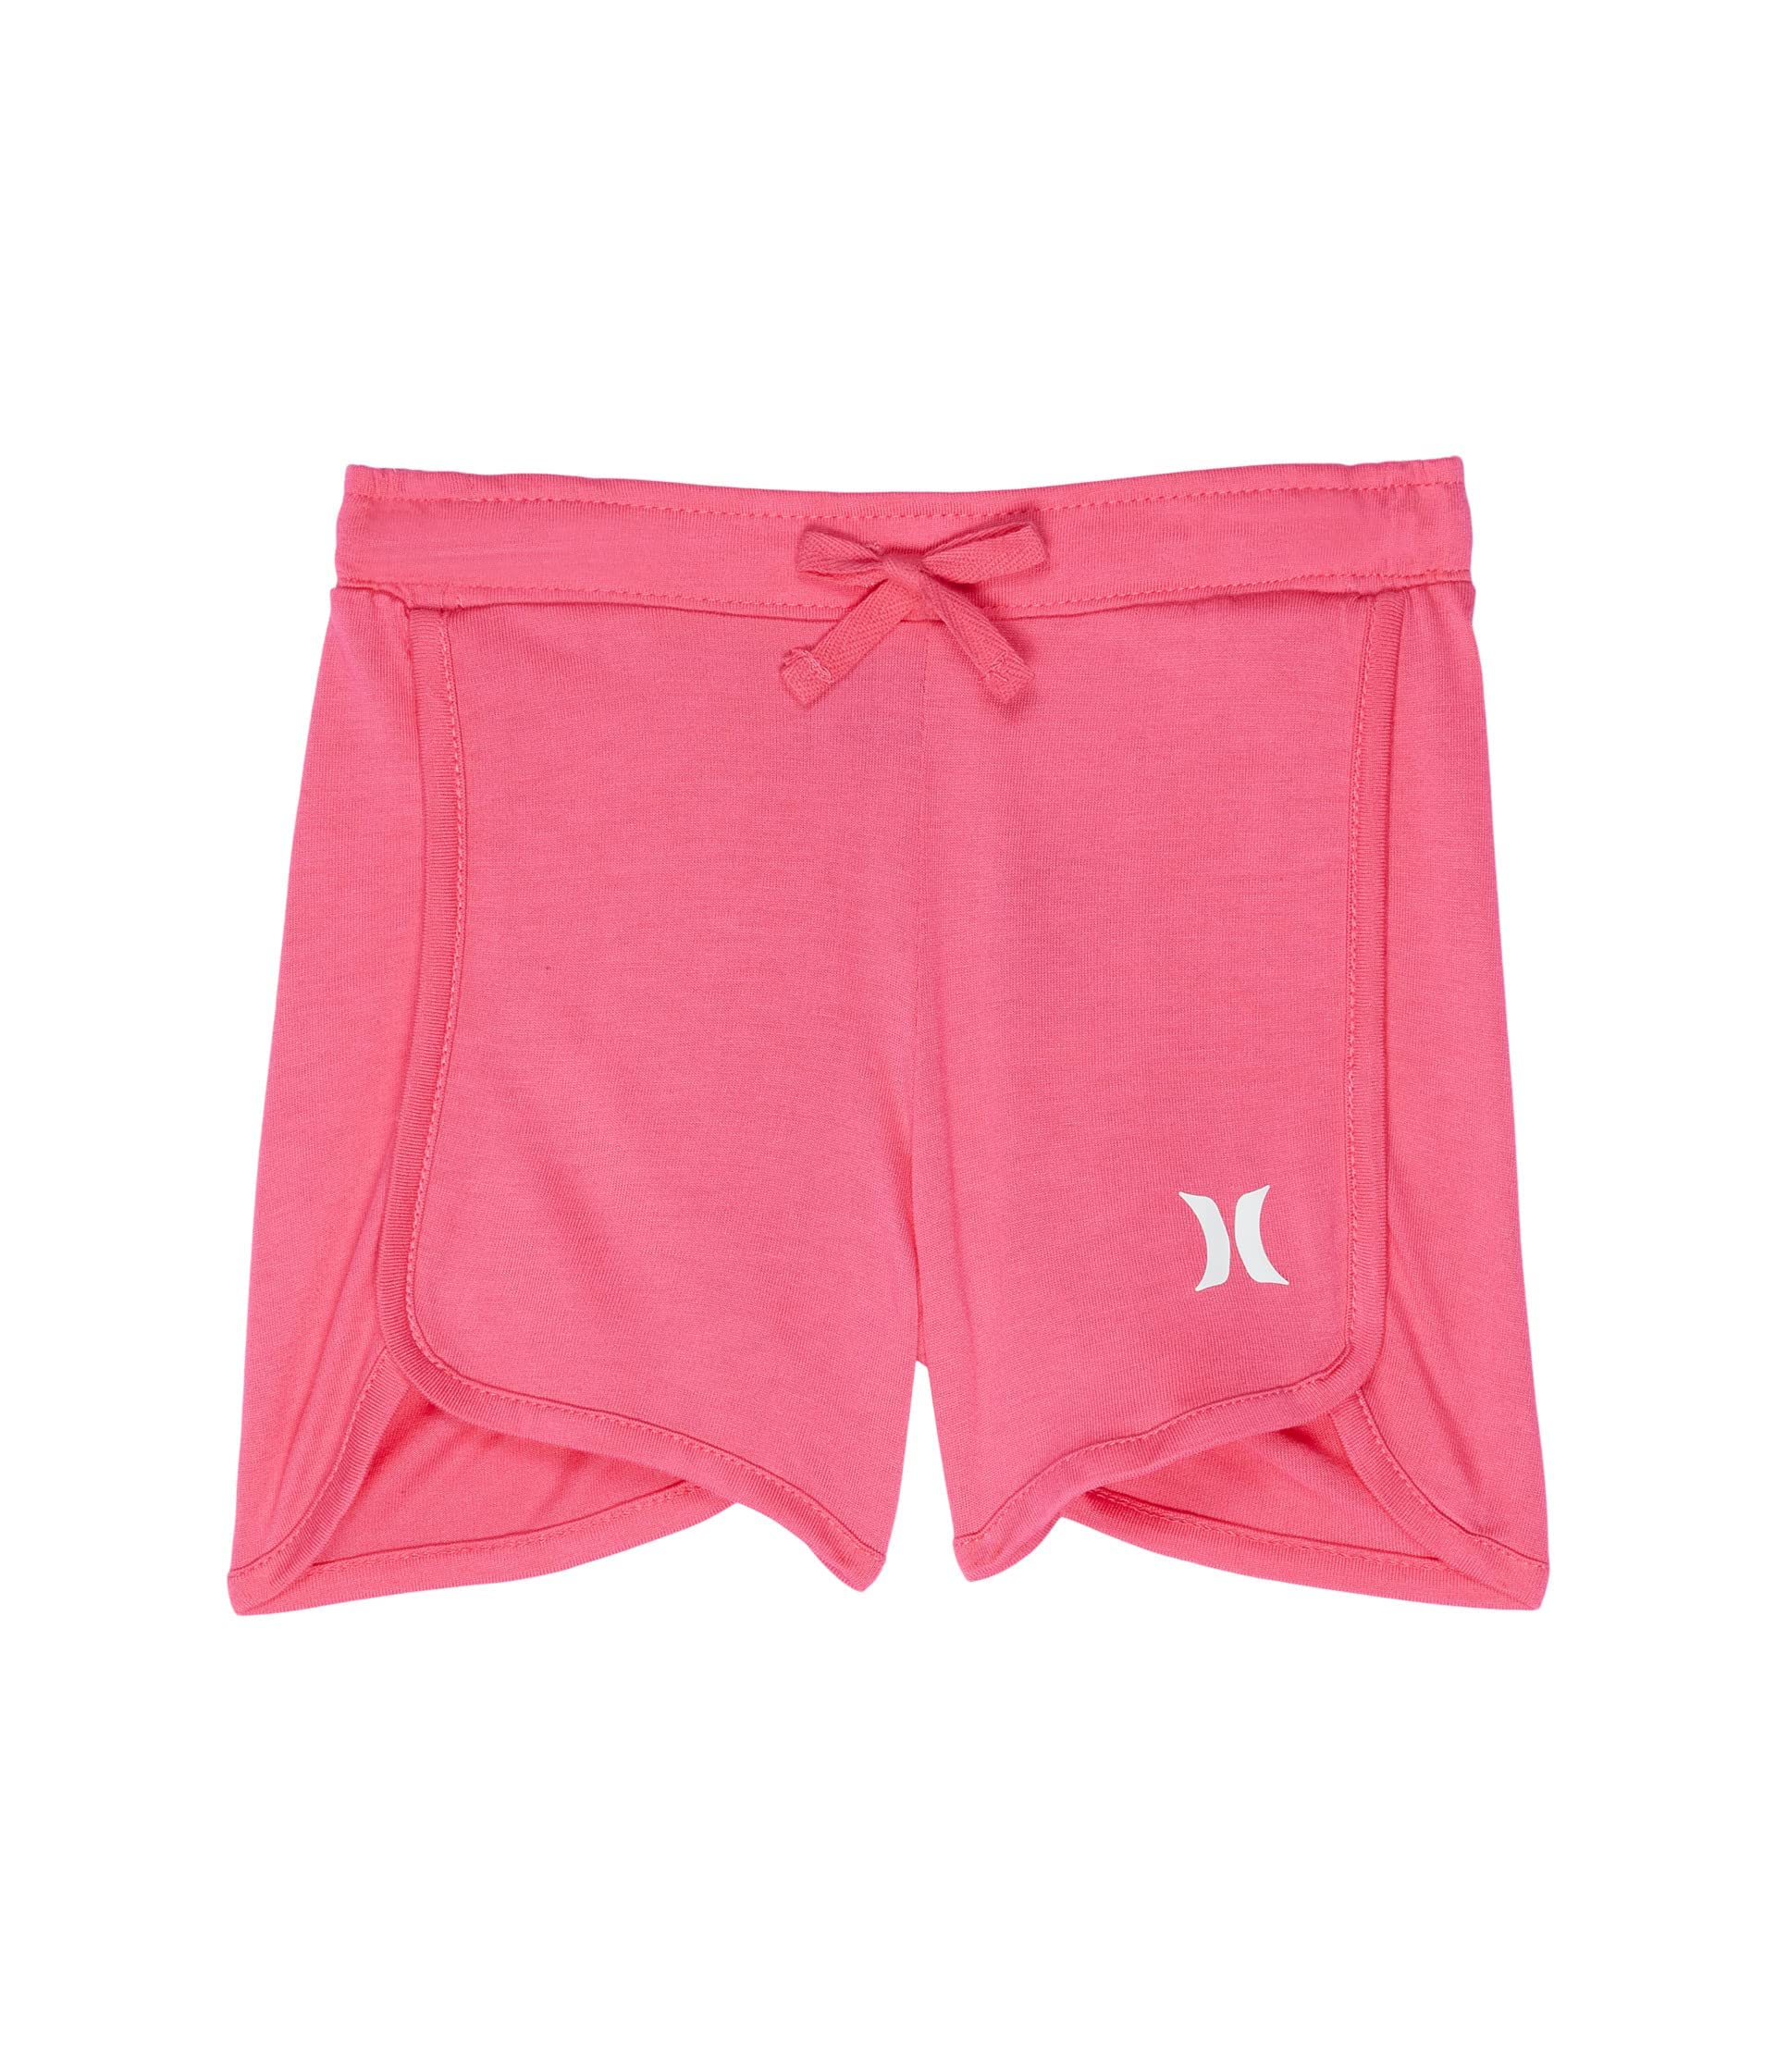 Hurley Girl's High-Waisted Shorts (Little Kids/Big Kids) Hyper Pink MD (10 Big Kid)